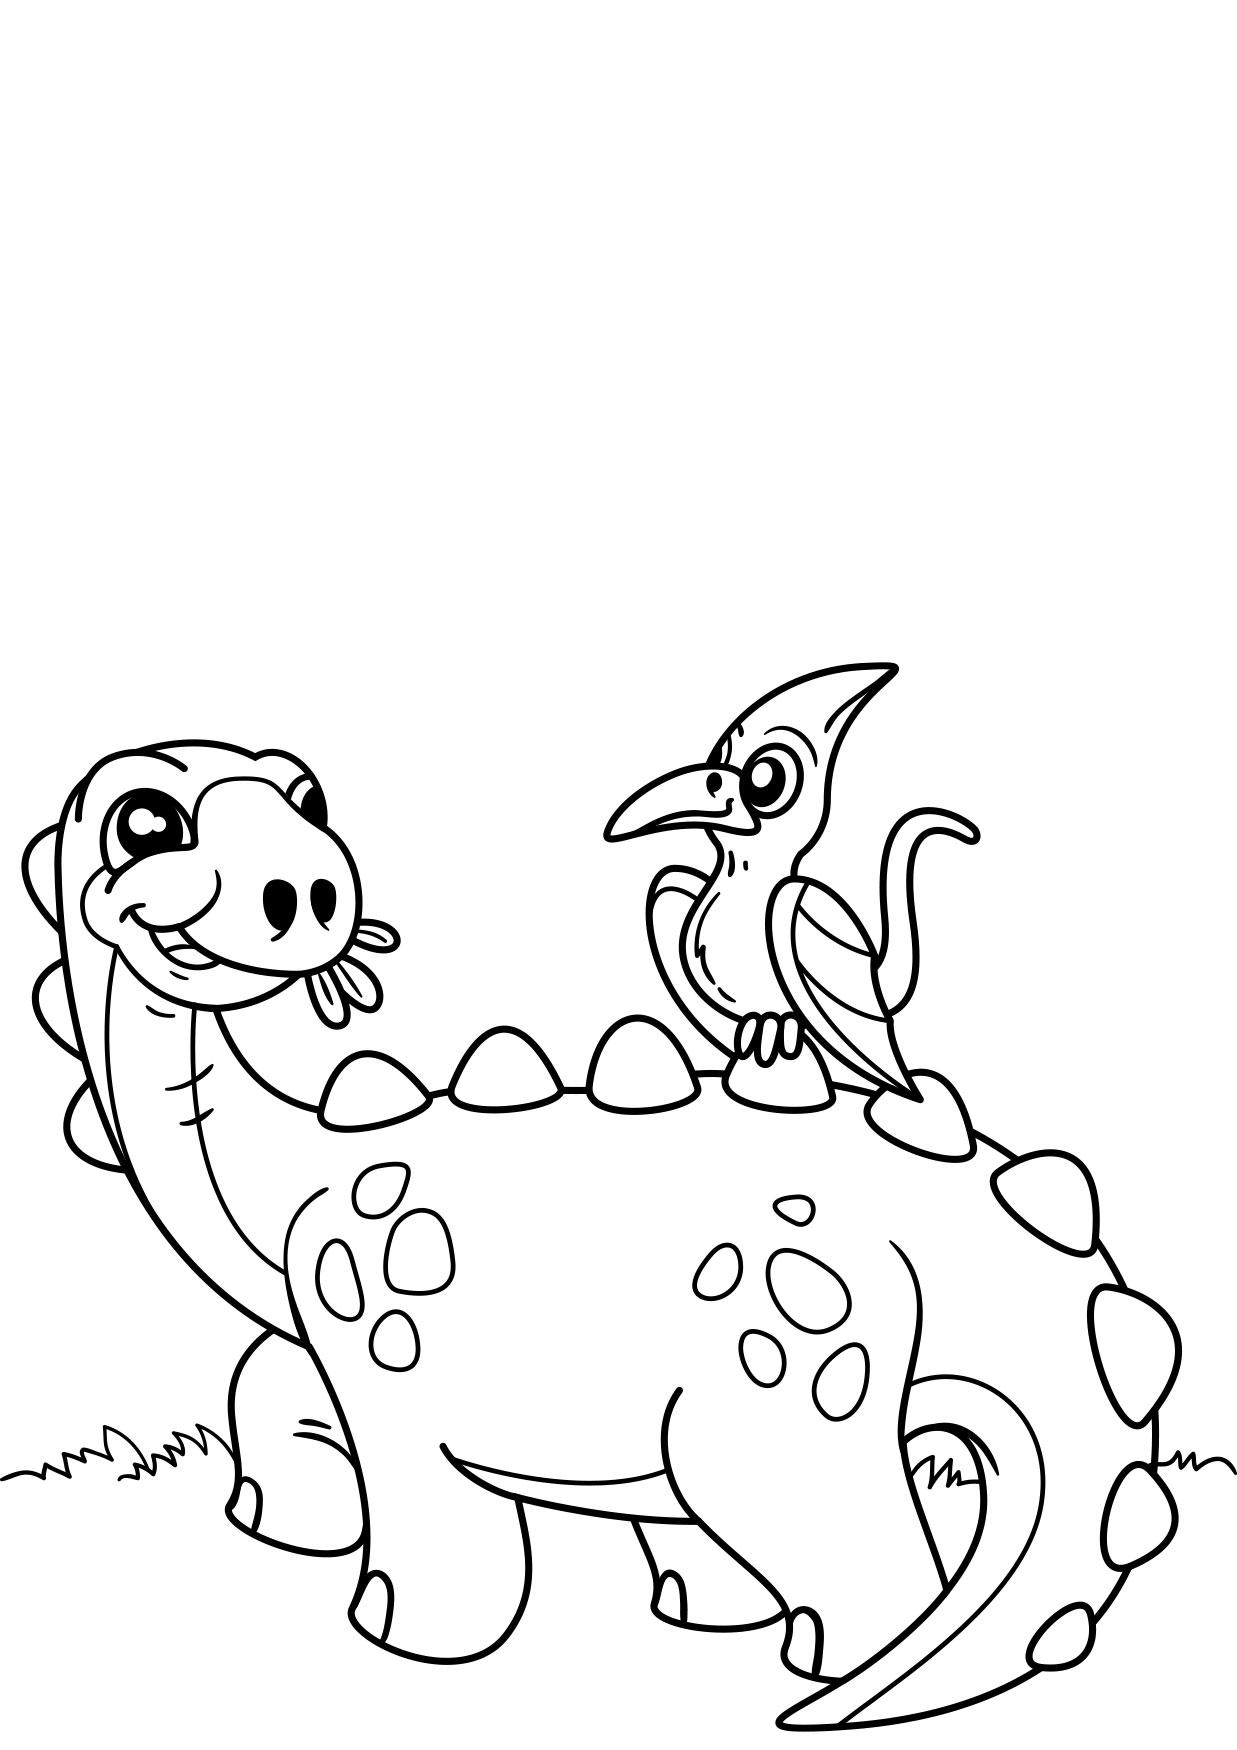 Dibujo para colorear dinosaurio con pÃ¡jaro